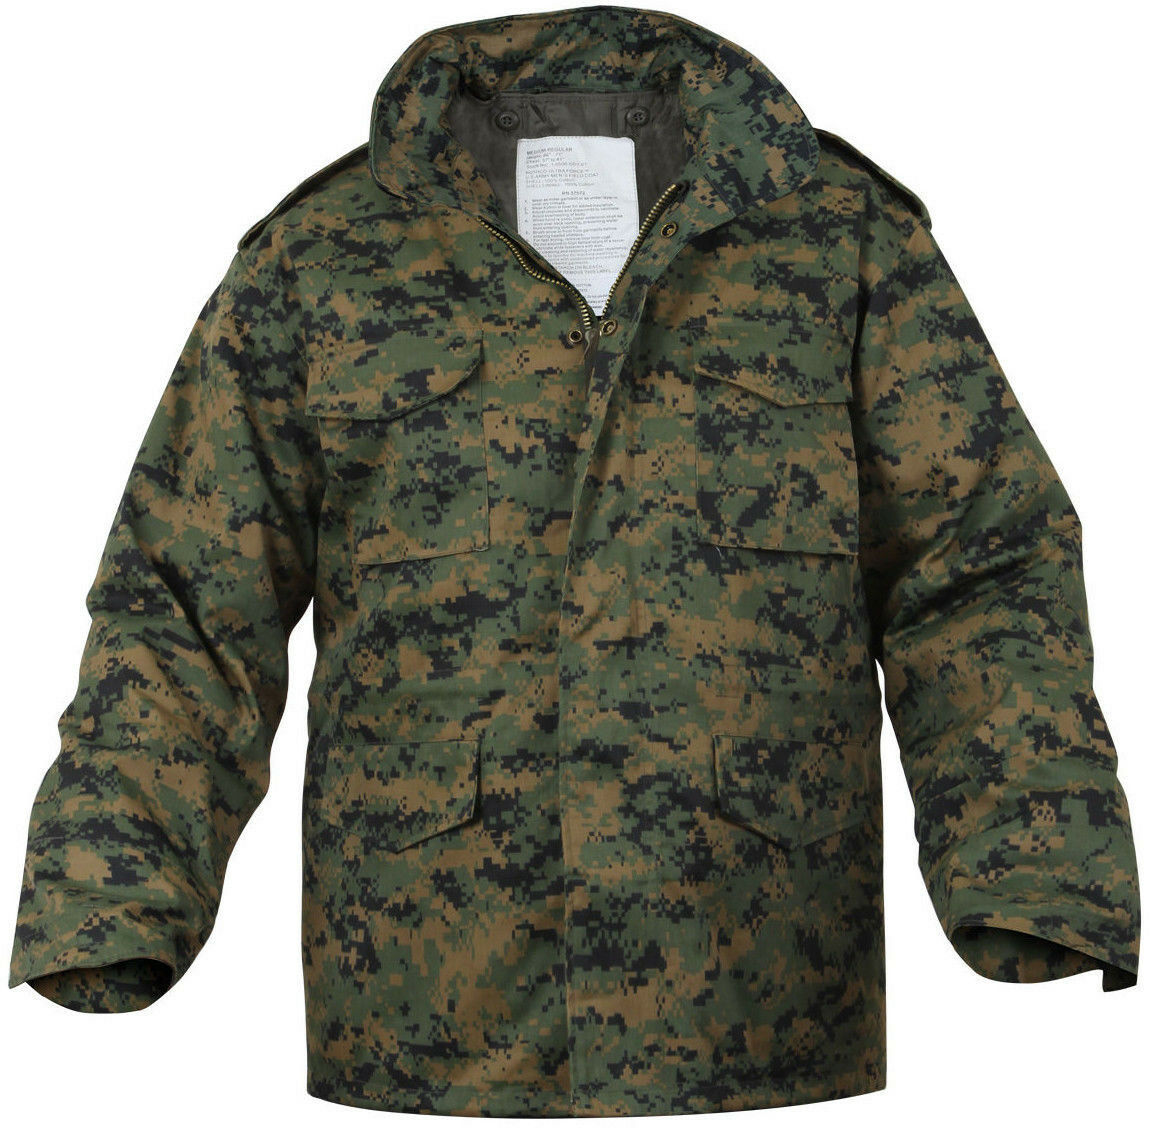 Woodland Digital Camouflage MARPAT M-65 Field Coat Army M65 Jacket w ...